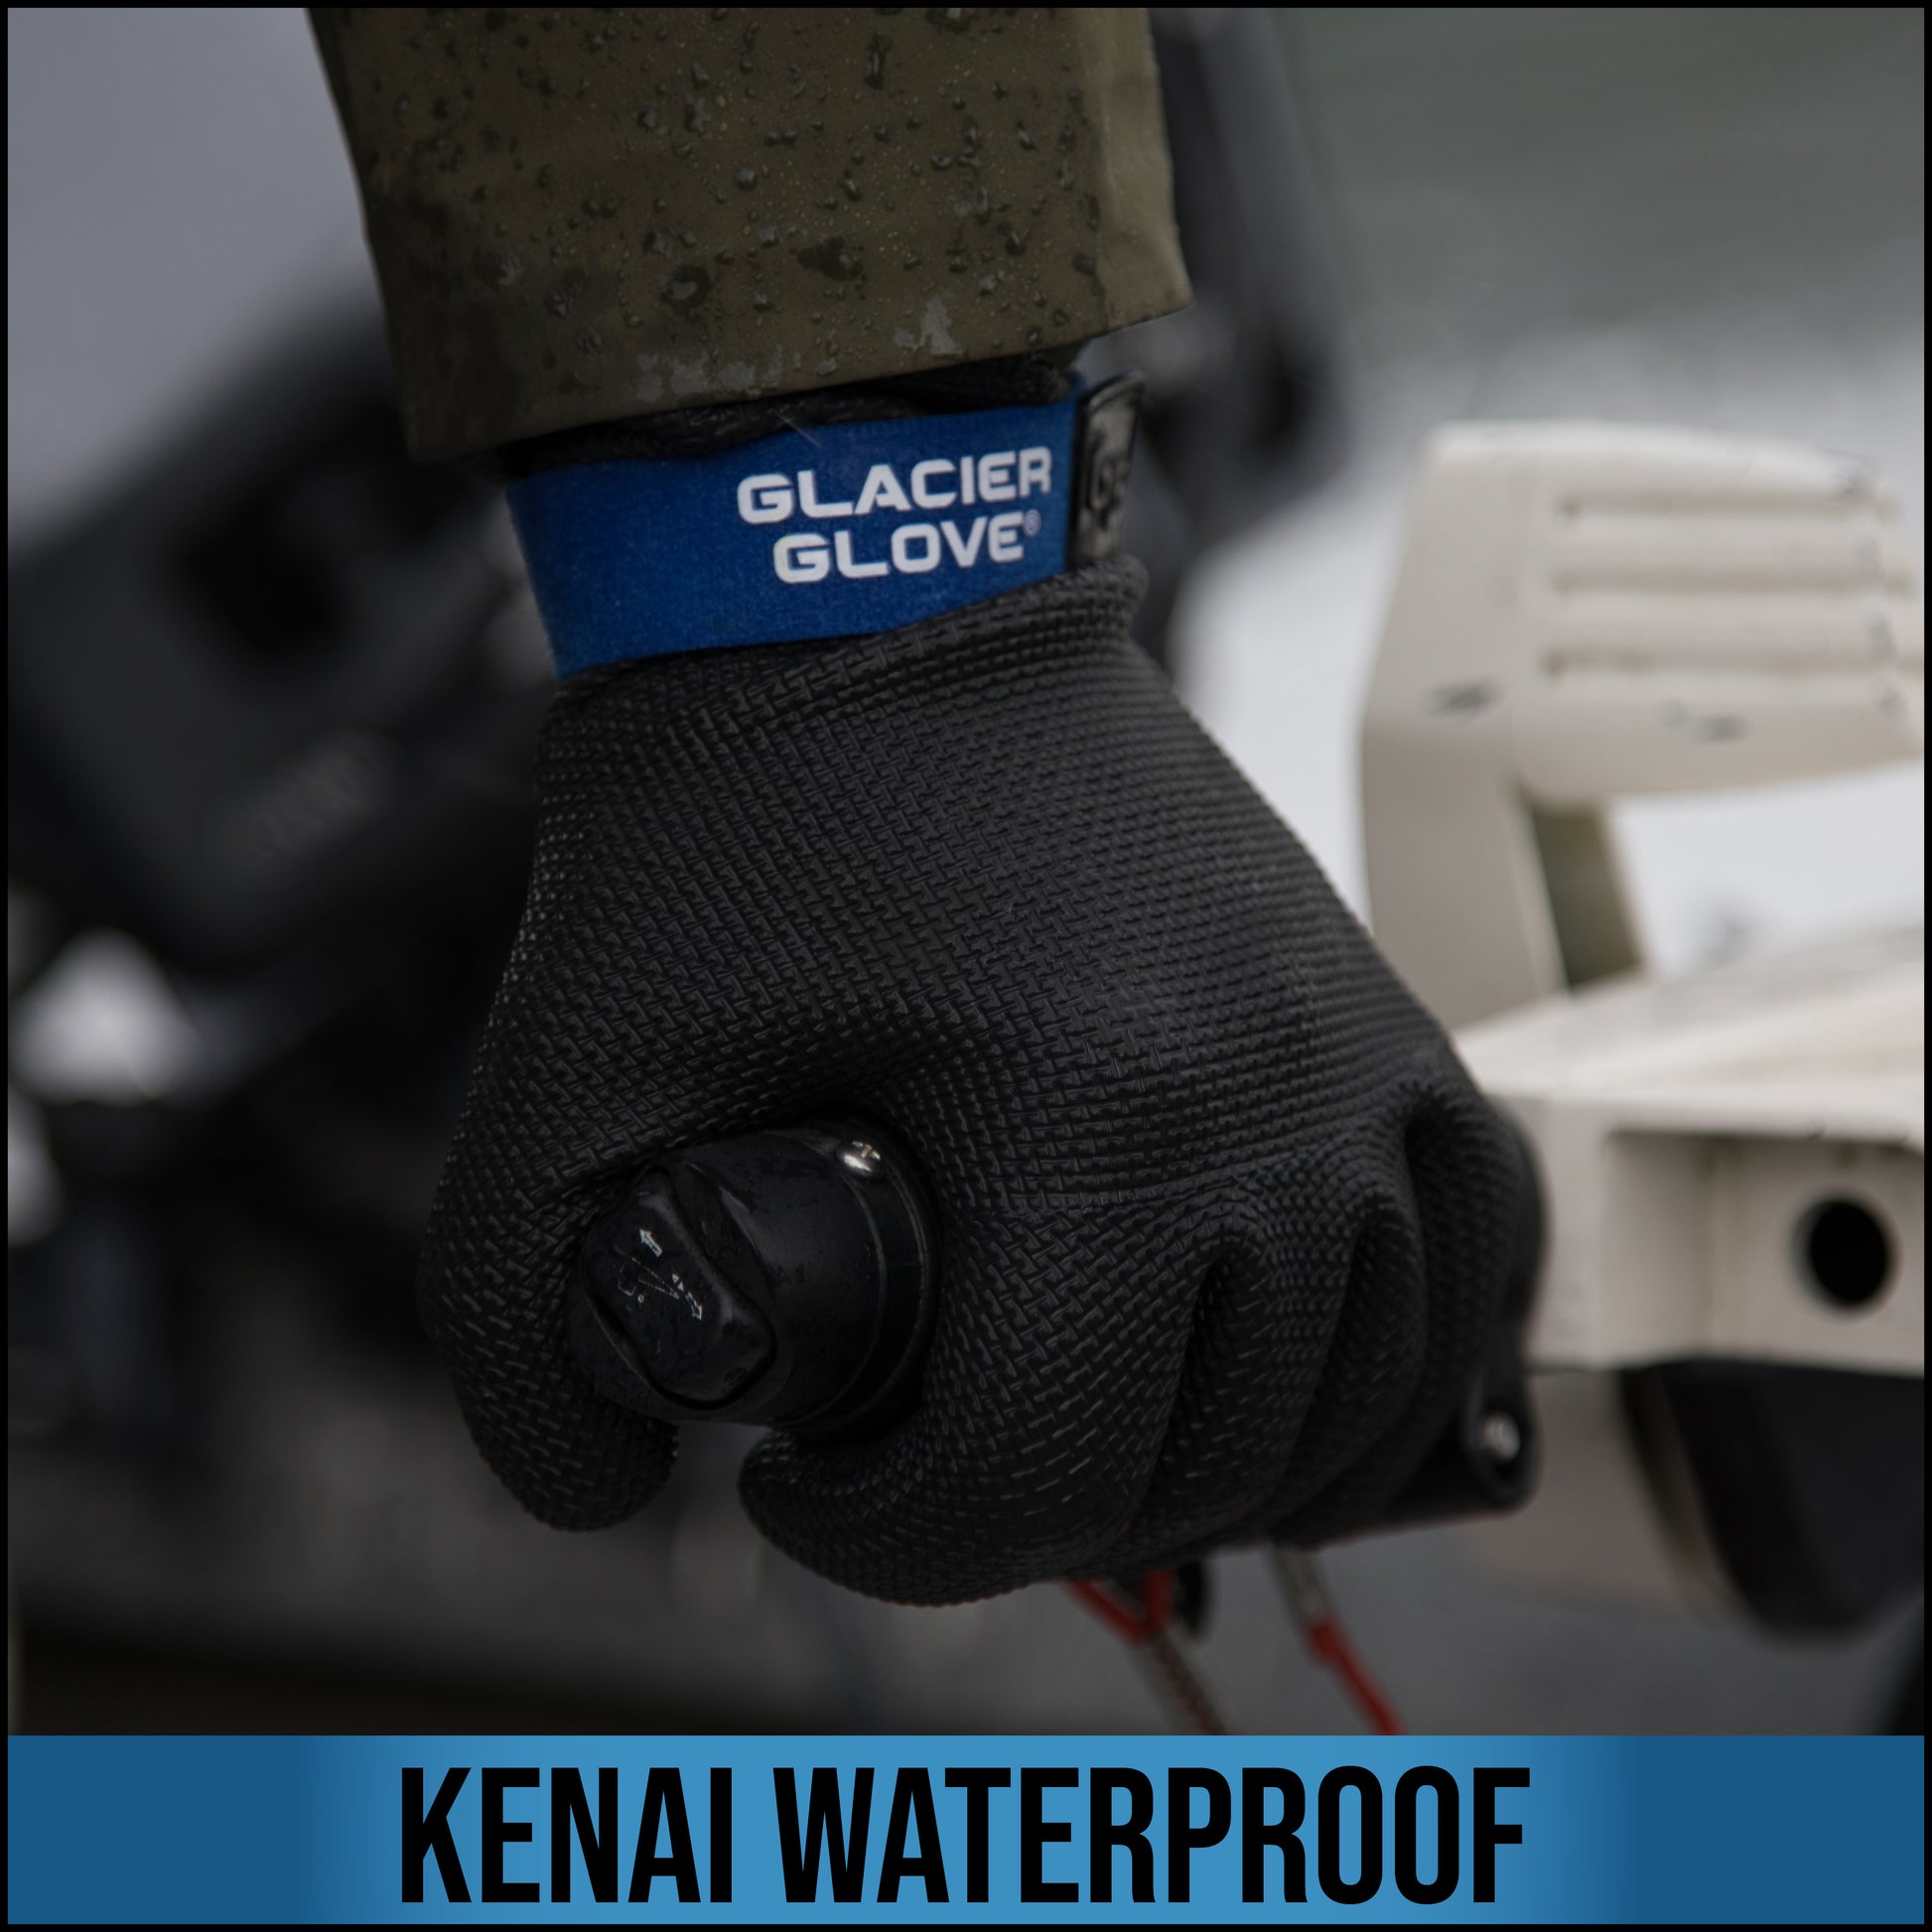 Glacier Glove Bristol Bay Full Finger Waterproof Gloves - Black